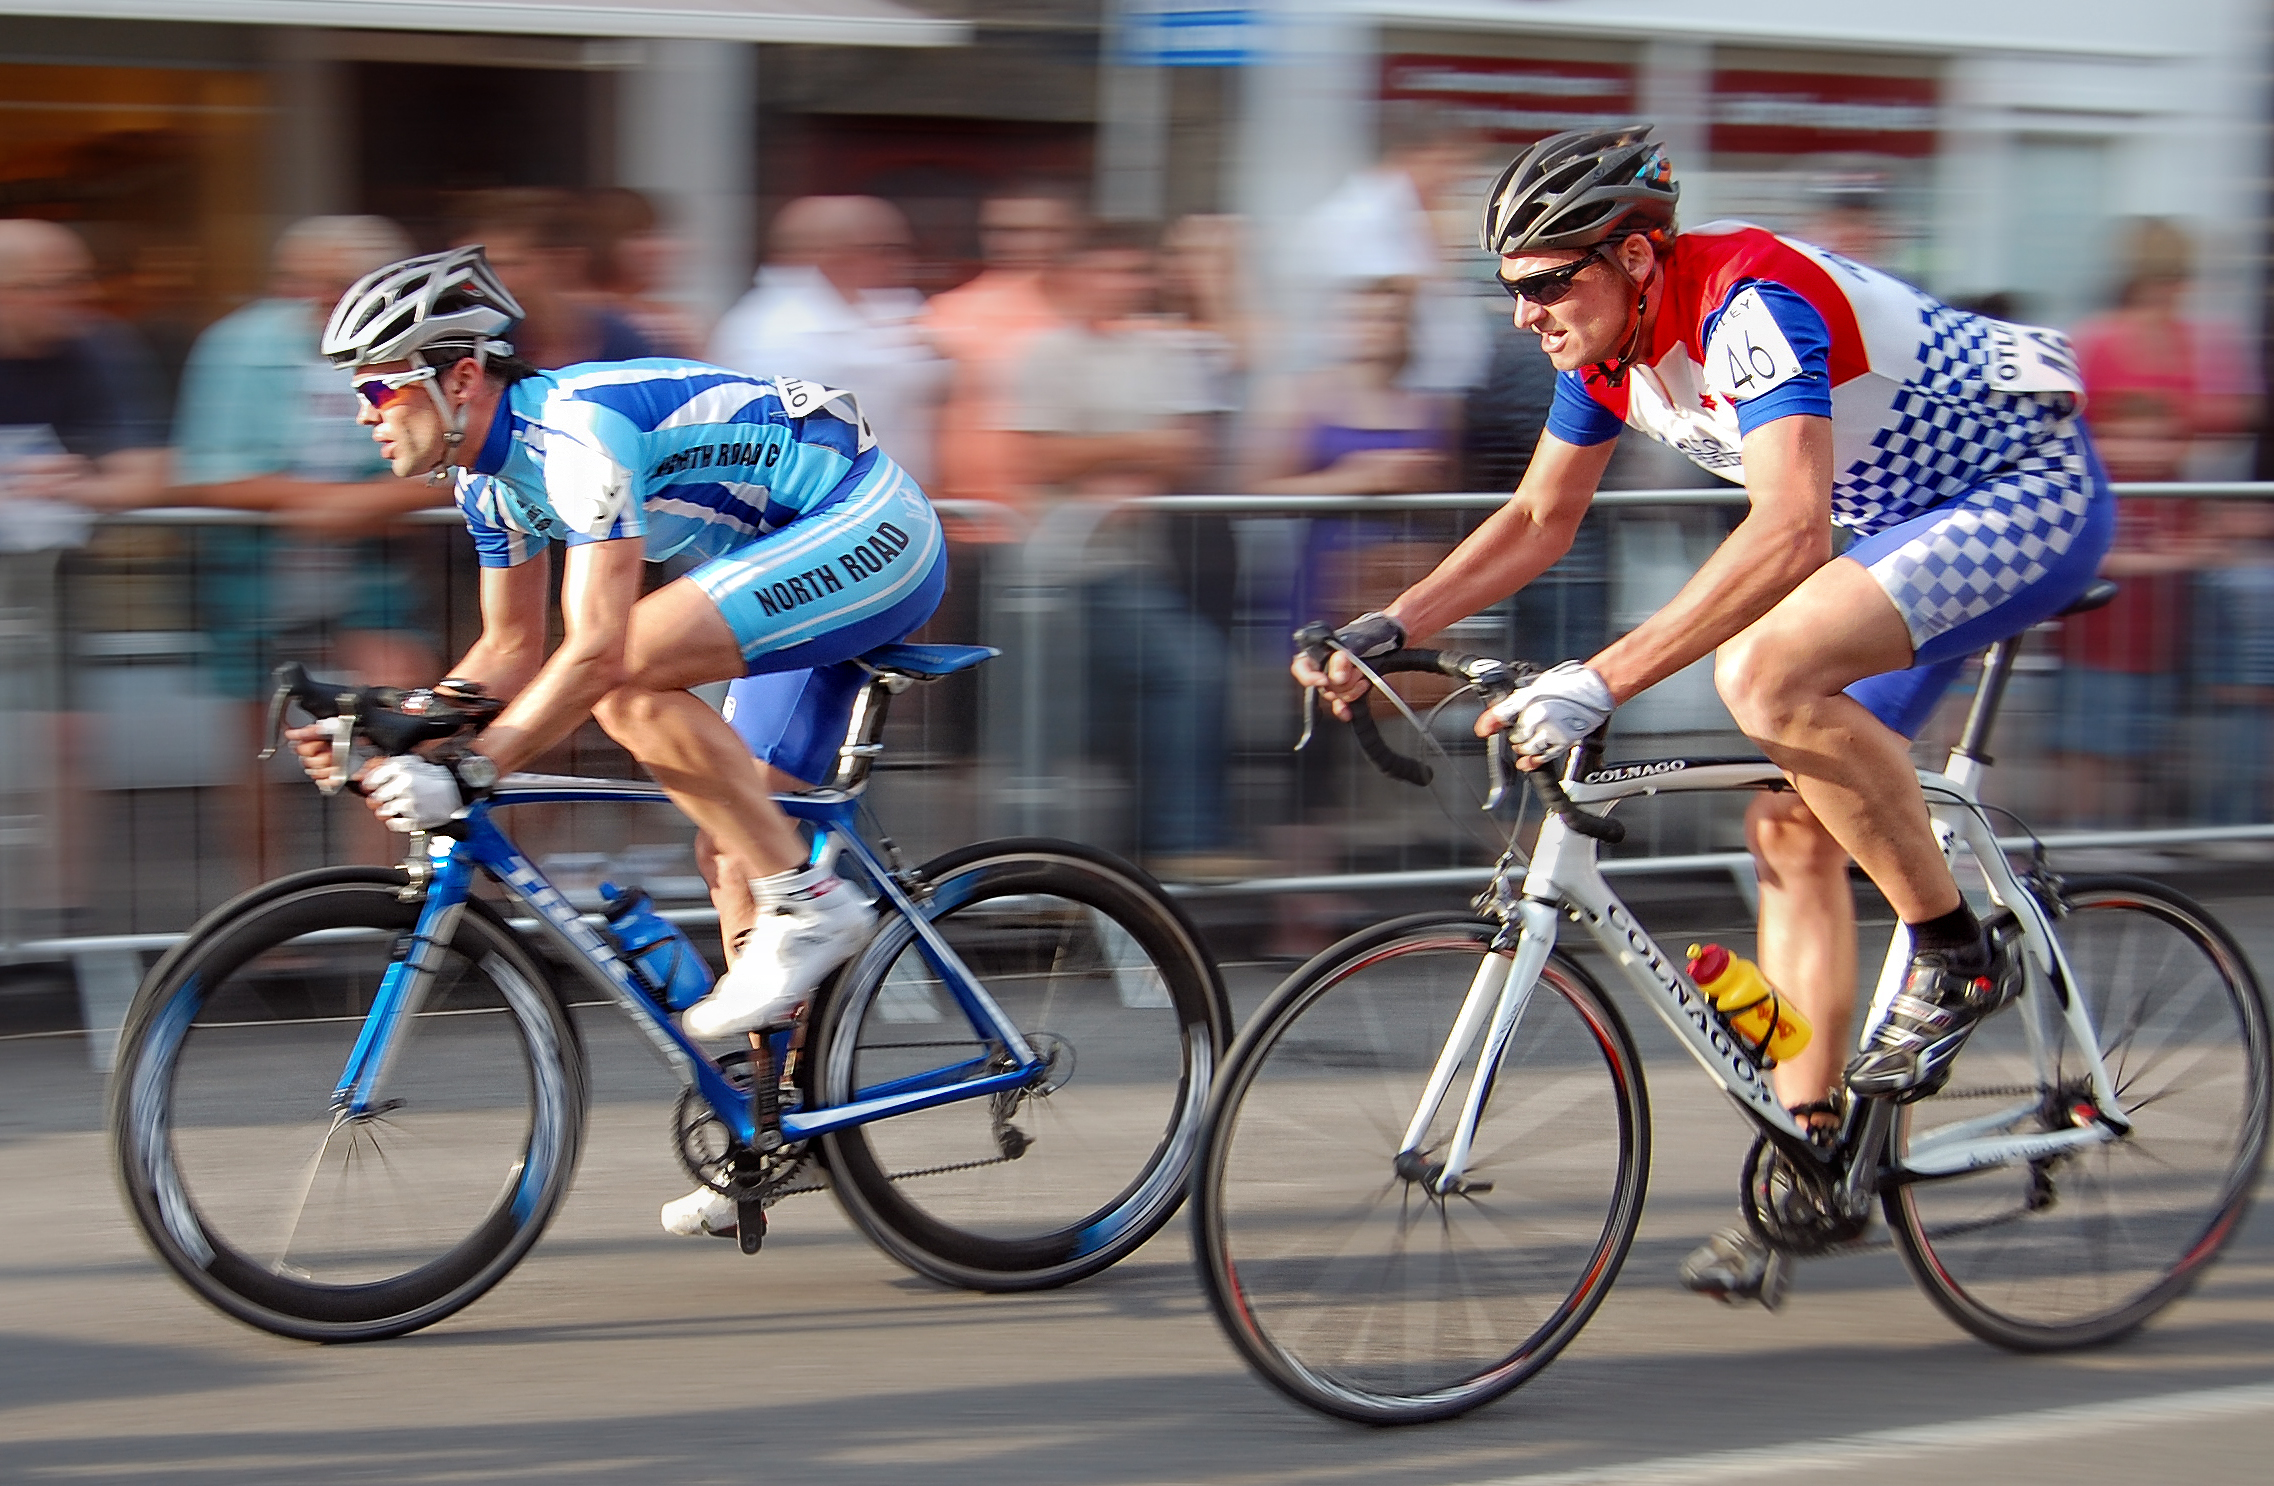 File:Otley Cycle Race 2009.jpg - Wikimedia Commons